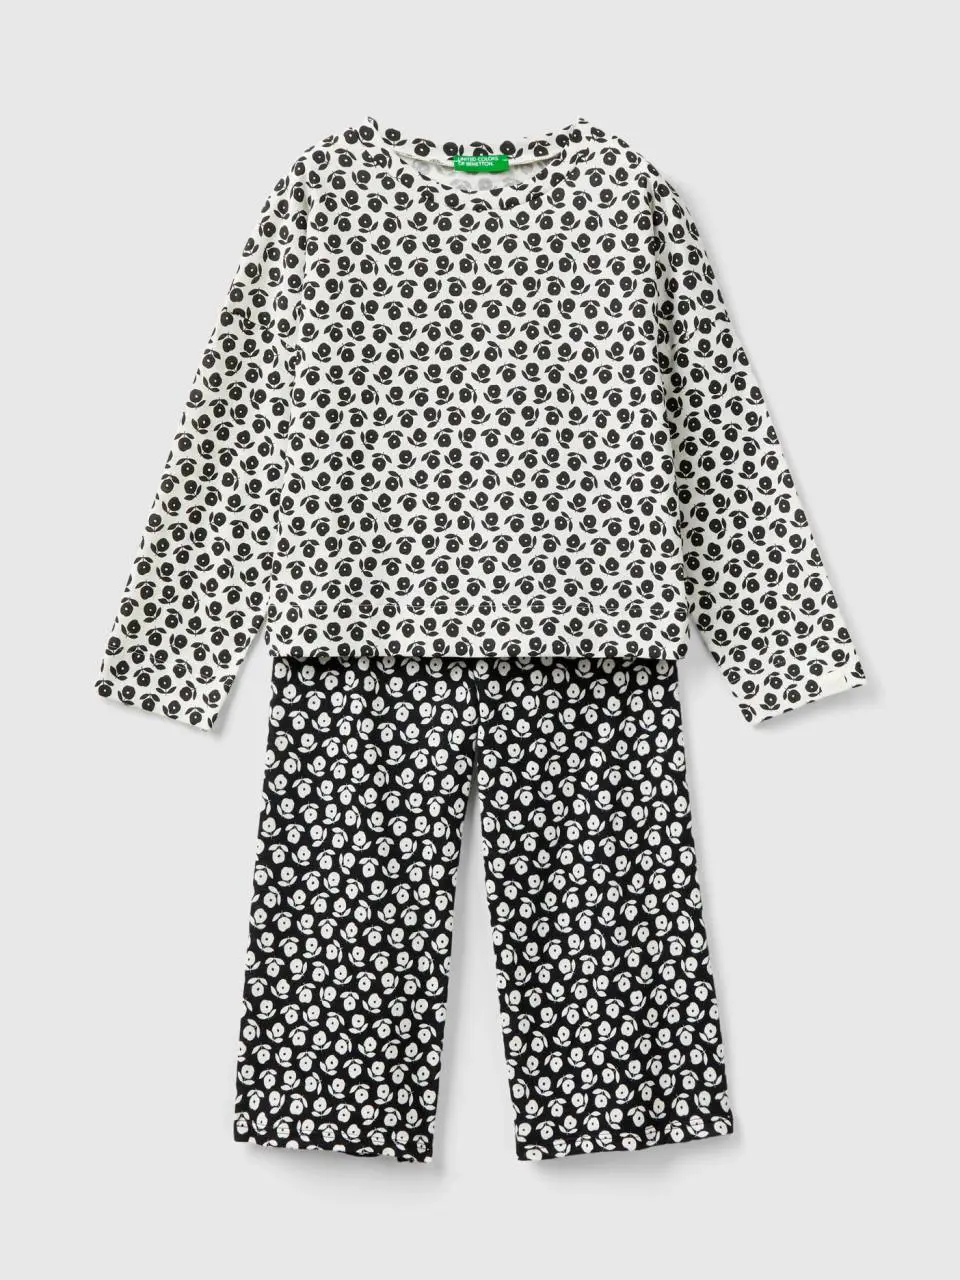 Benetton floral pyjamas in warm cotton. 1